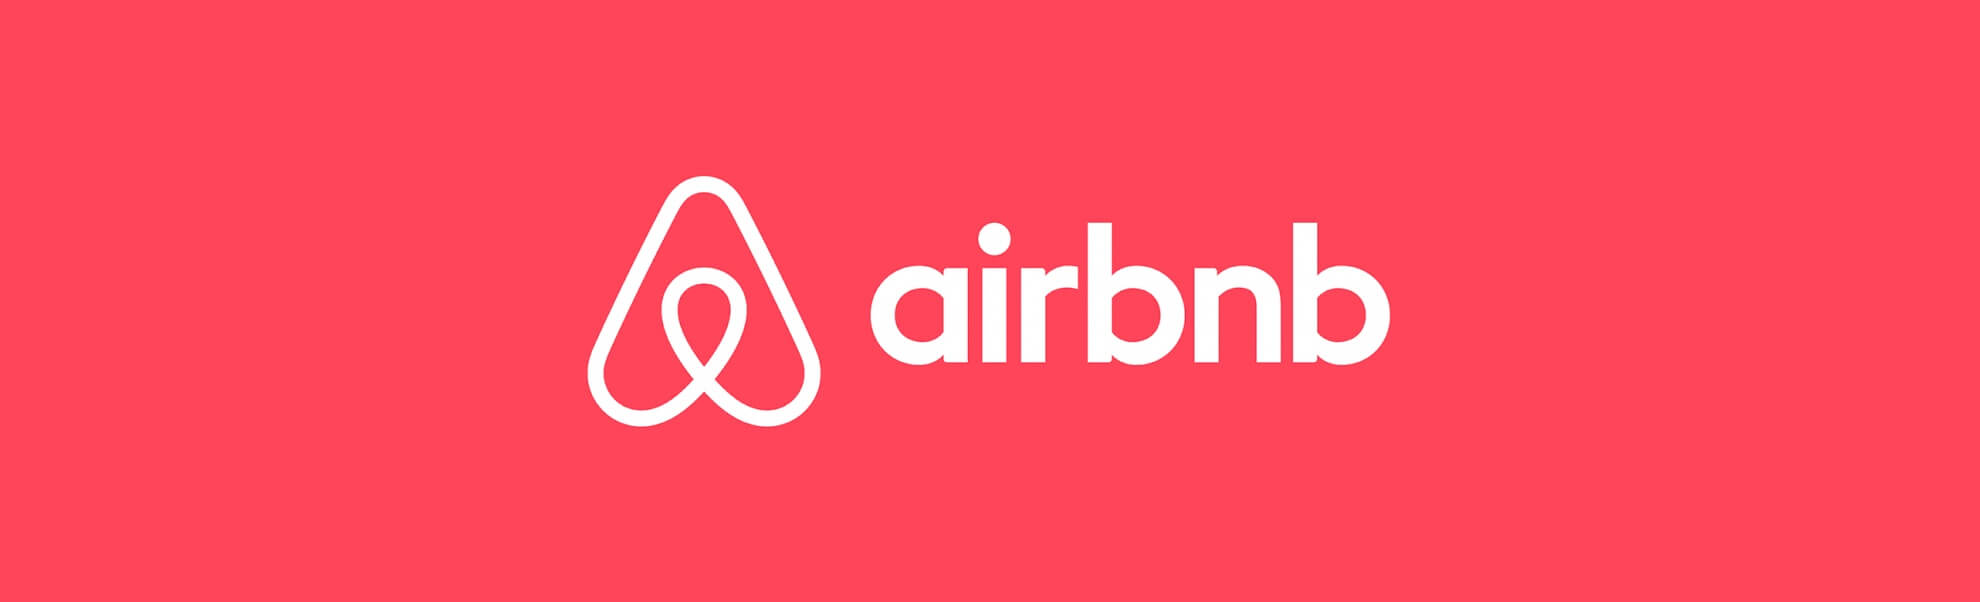 Airbnb старый лого. Airbnb для компьютеров. Airbnb страховка. Airbnb logo PNG. 100 available